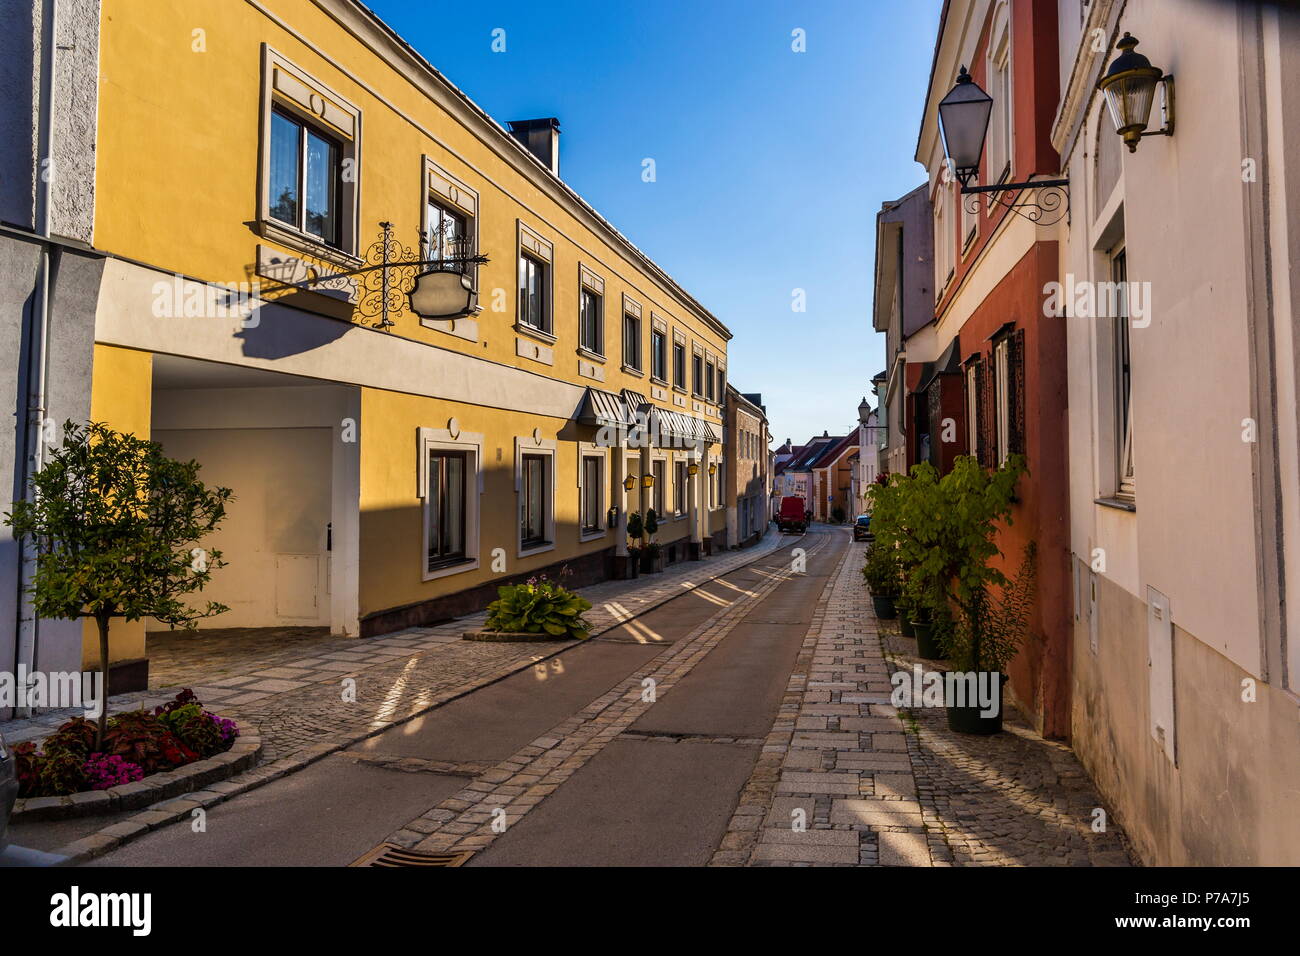 Street in Melk town in Austria Stock Photo